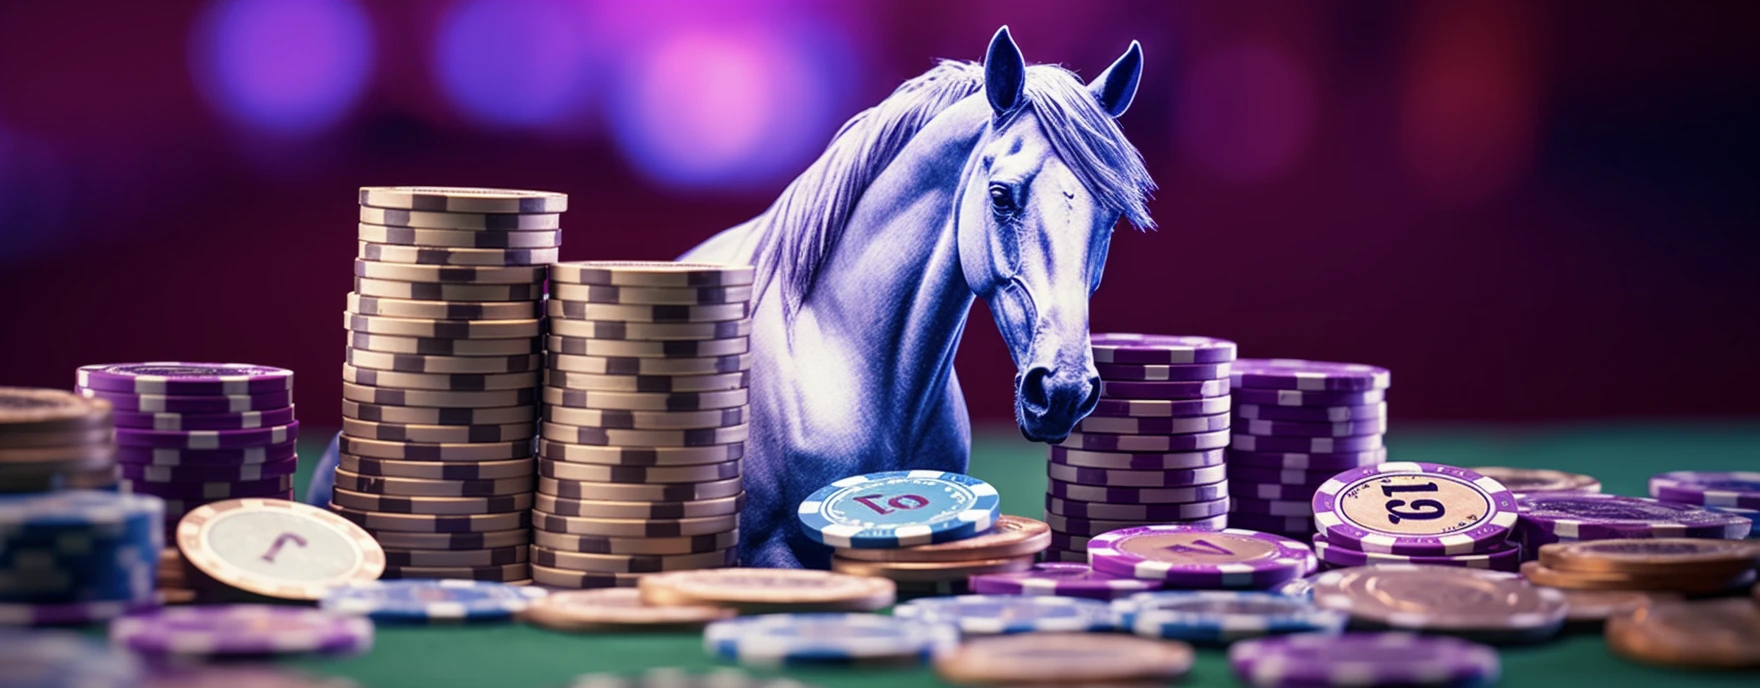 South dakota horse betting